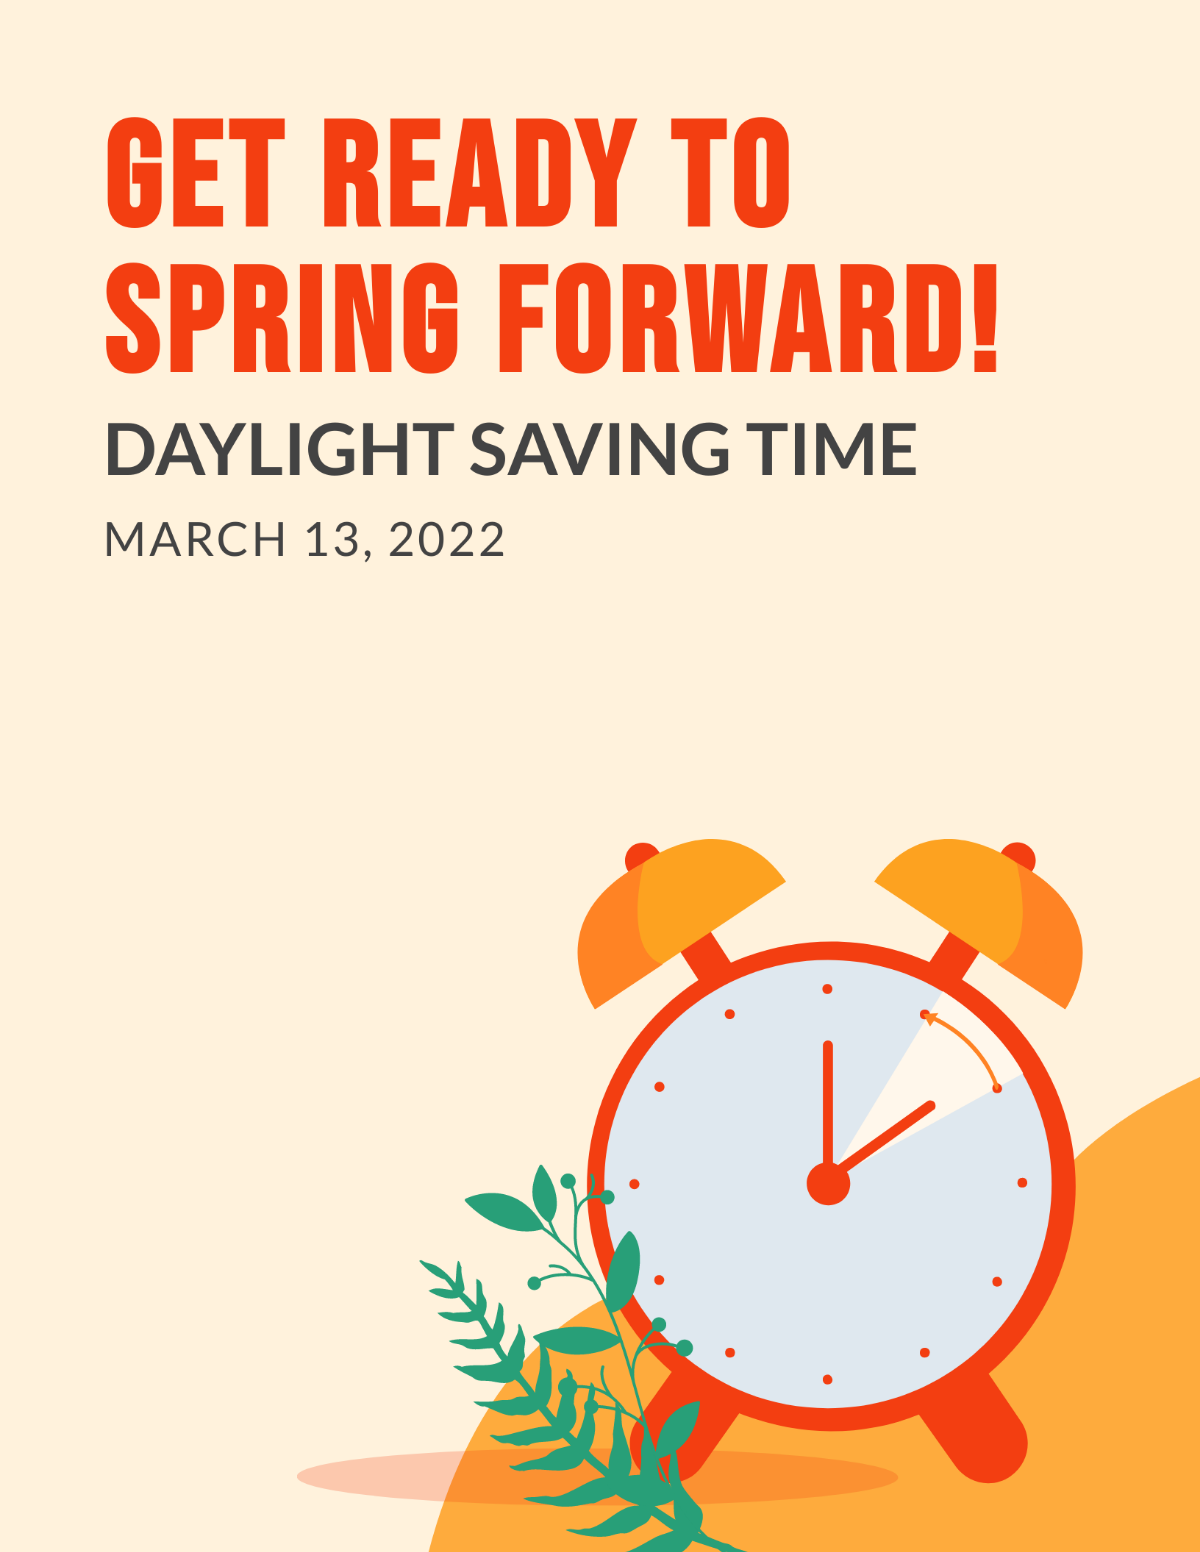 Spring forward. Daylight Saving Time. Summer time change Stock Photo